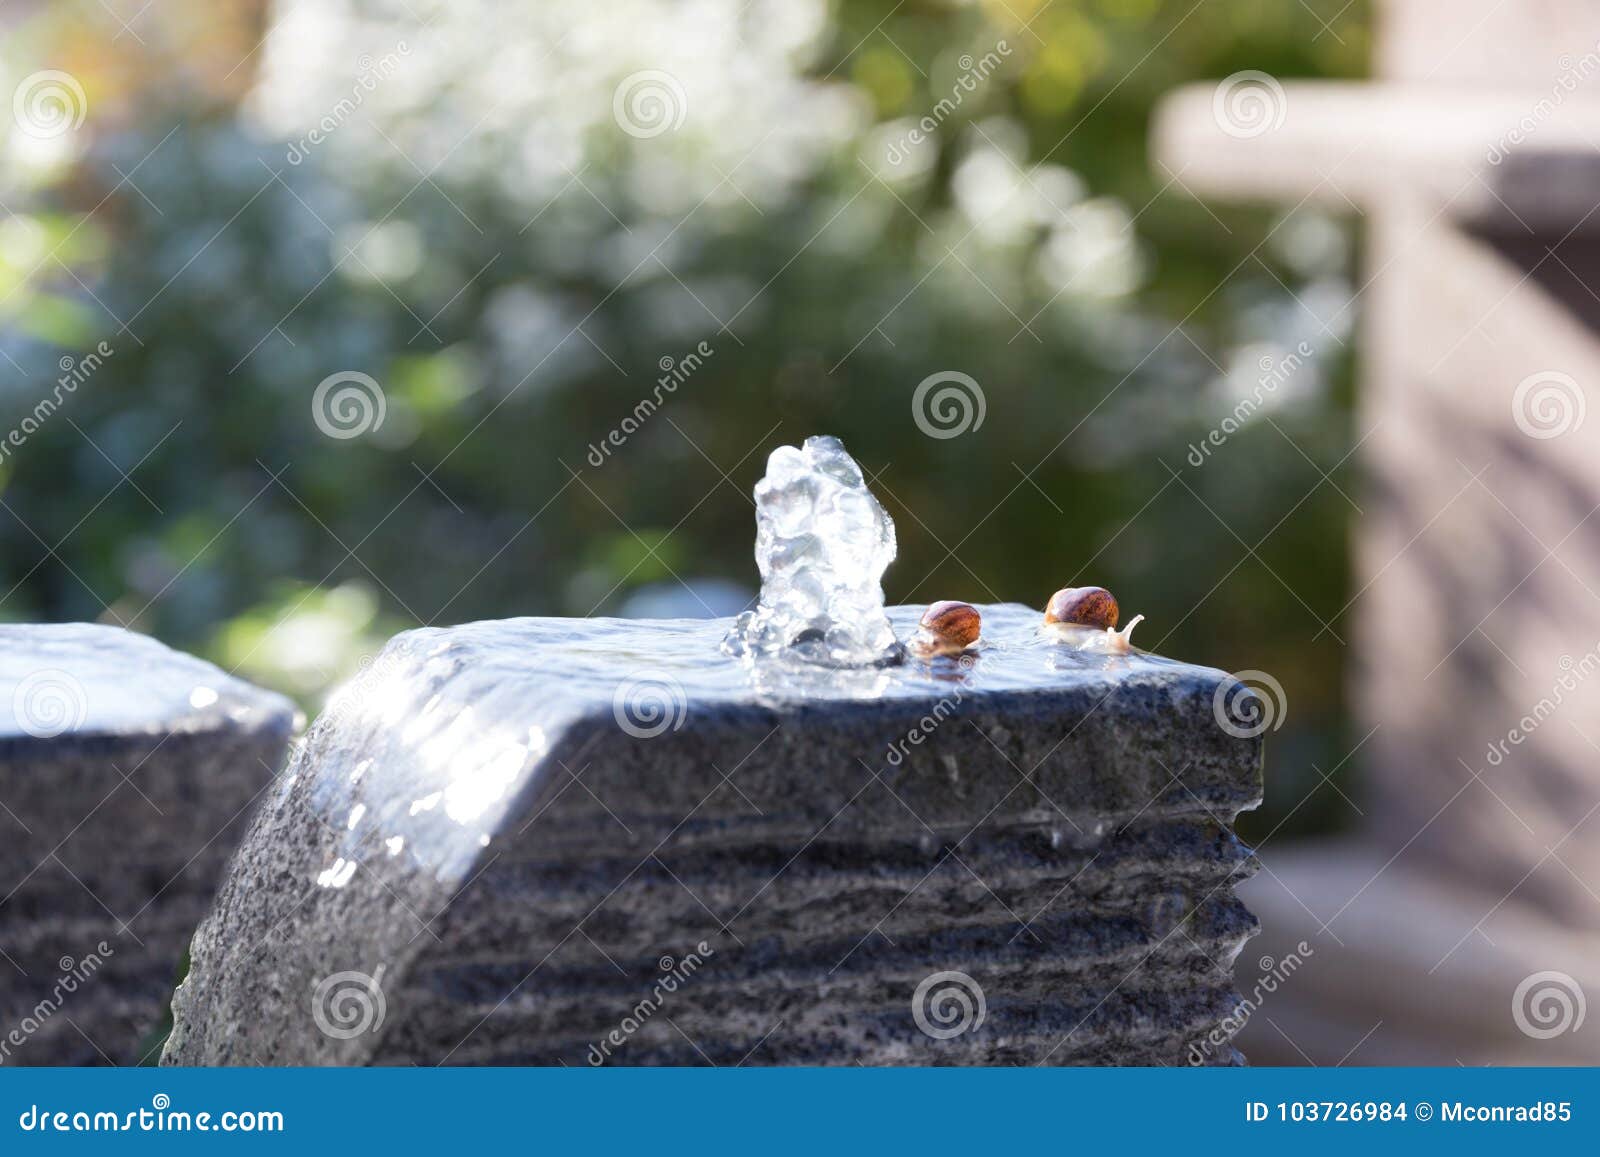 Two Slugs Snails Taking Bath on Water Fountain in Garden Area Stock Photo -  Image of curiosity, grass: 103726984